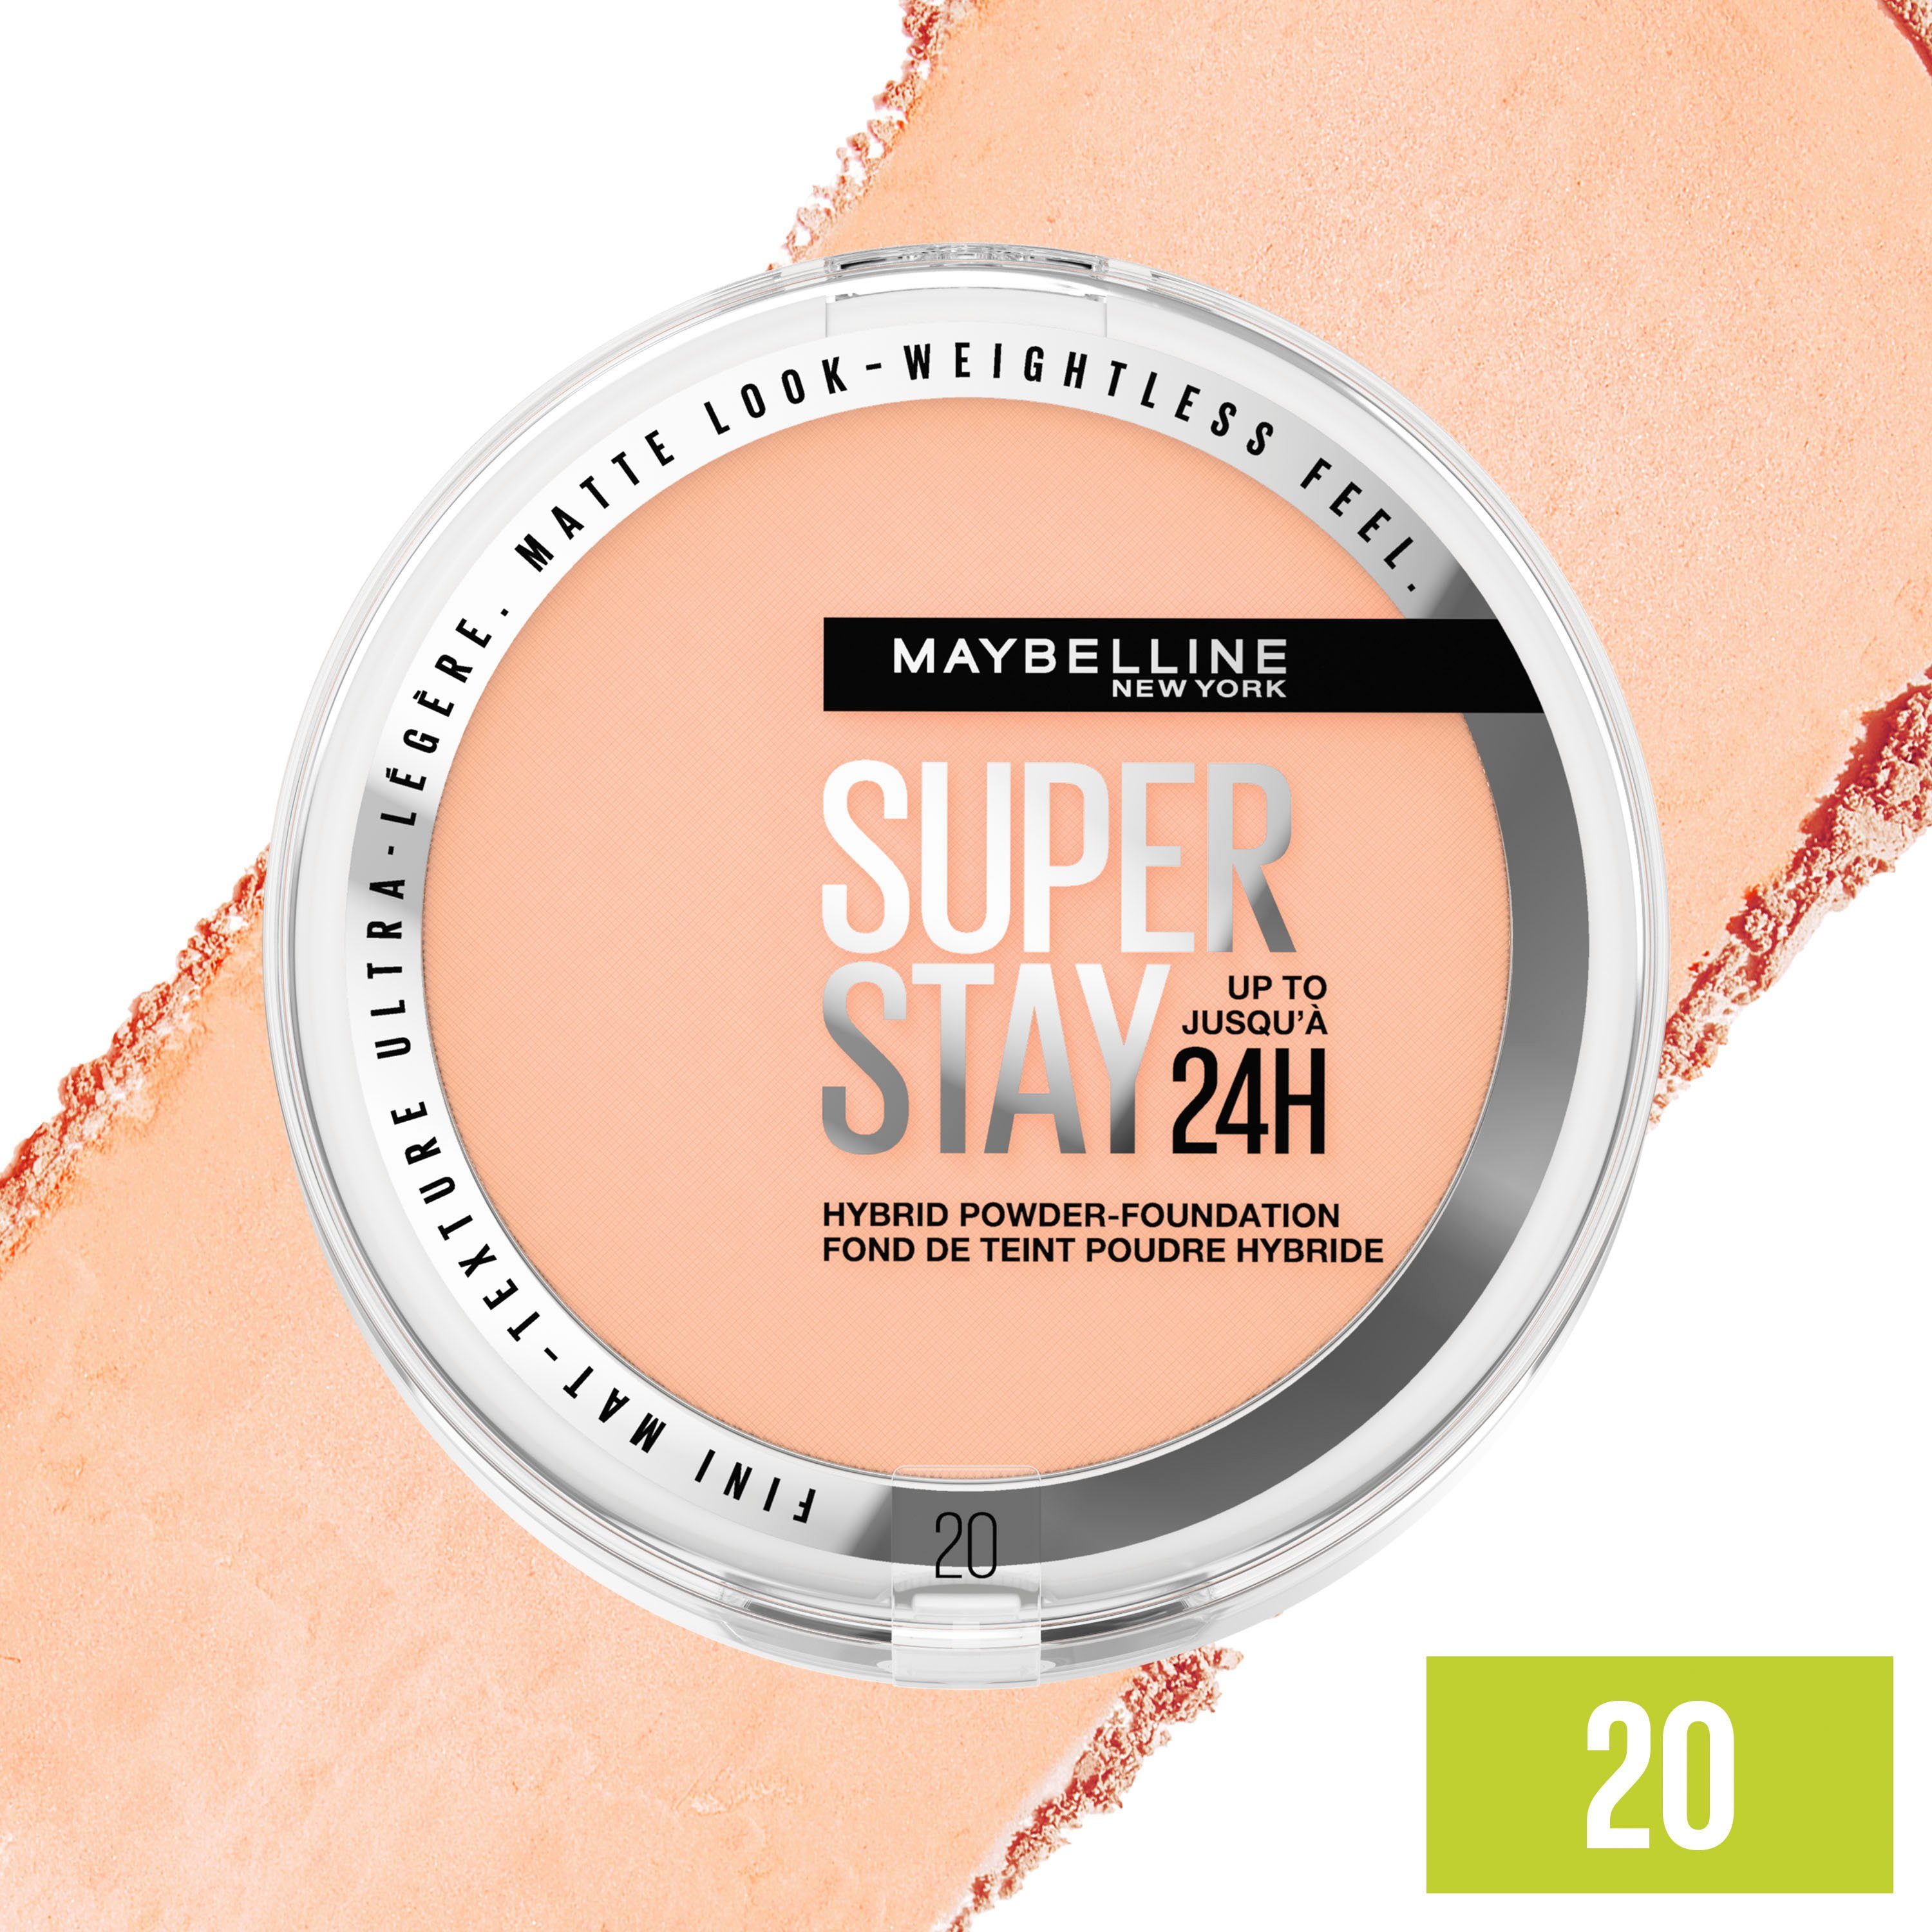 New Make-Up Foundation Maybelline Stay MAYBELLINE Hybrides NEW York YORK Super Puder